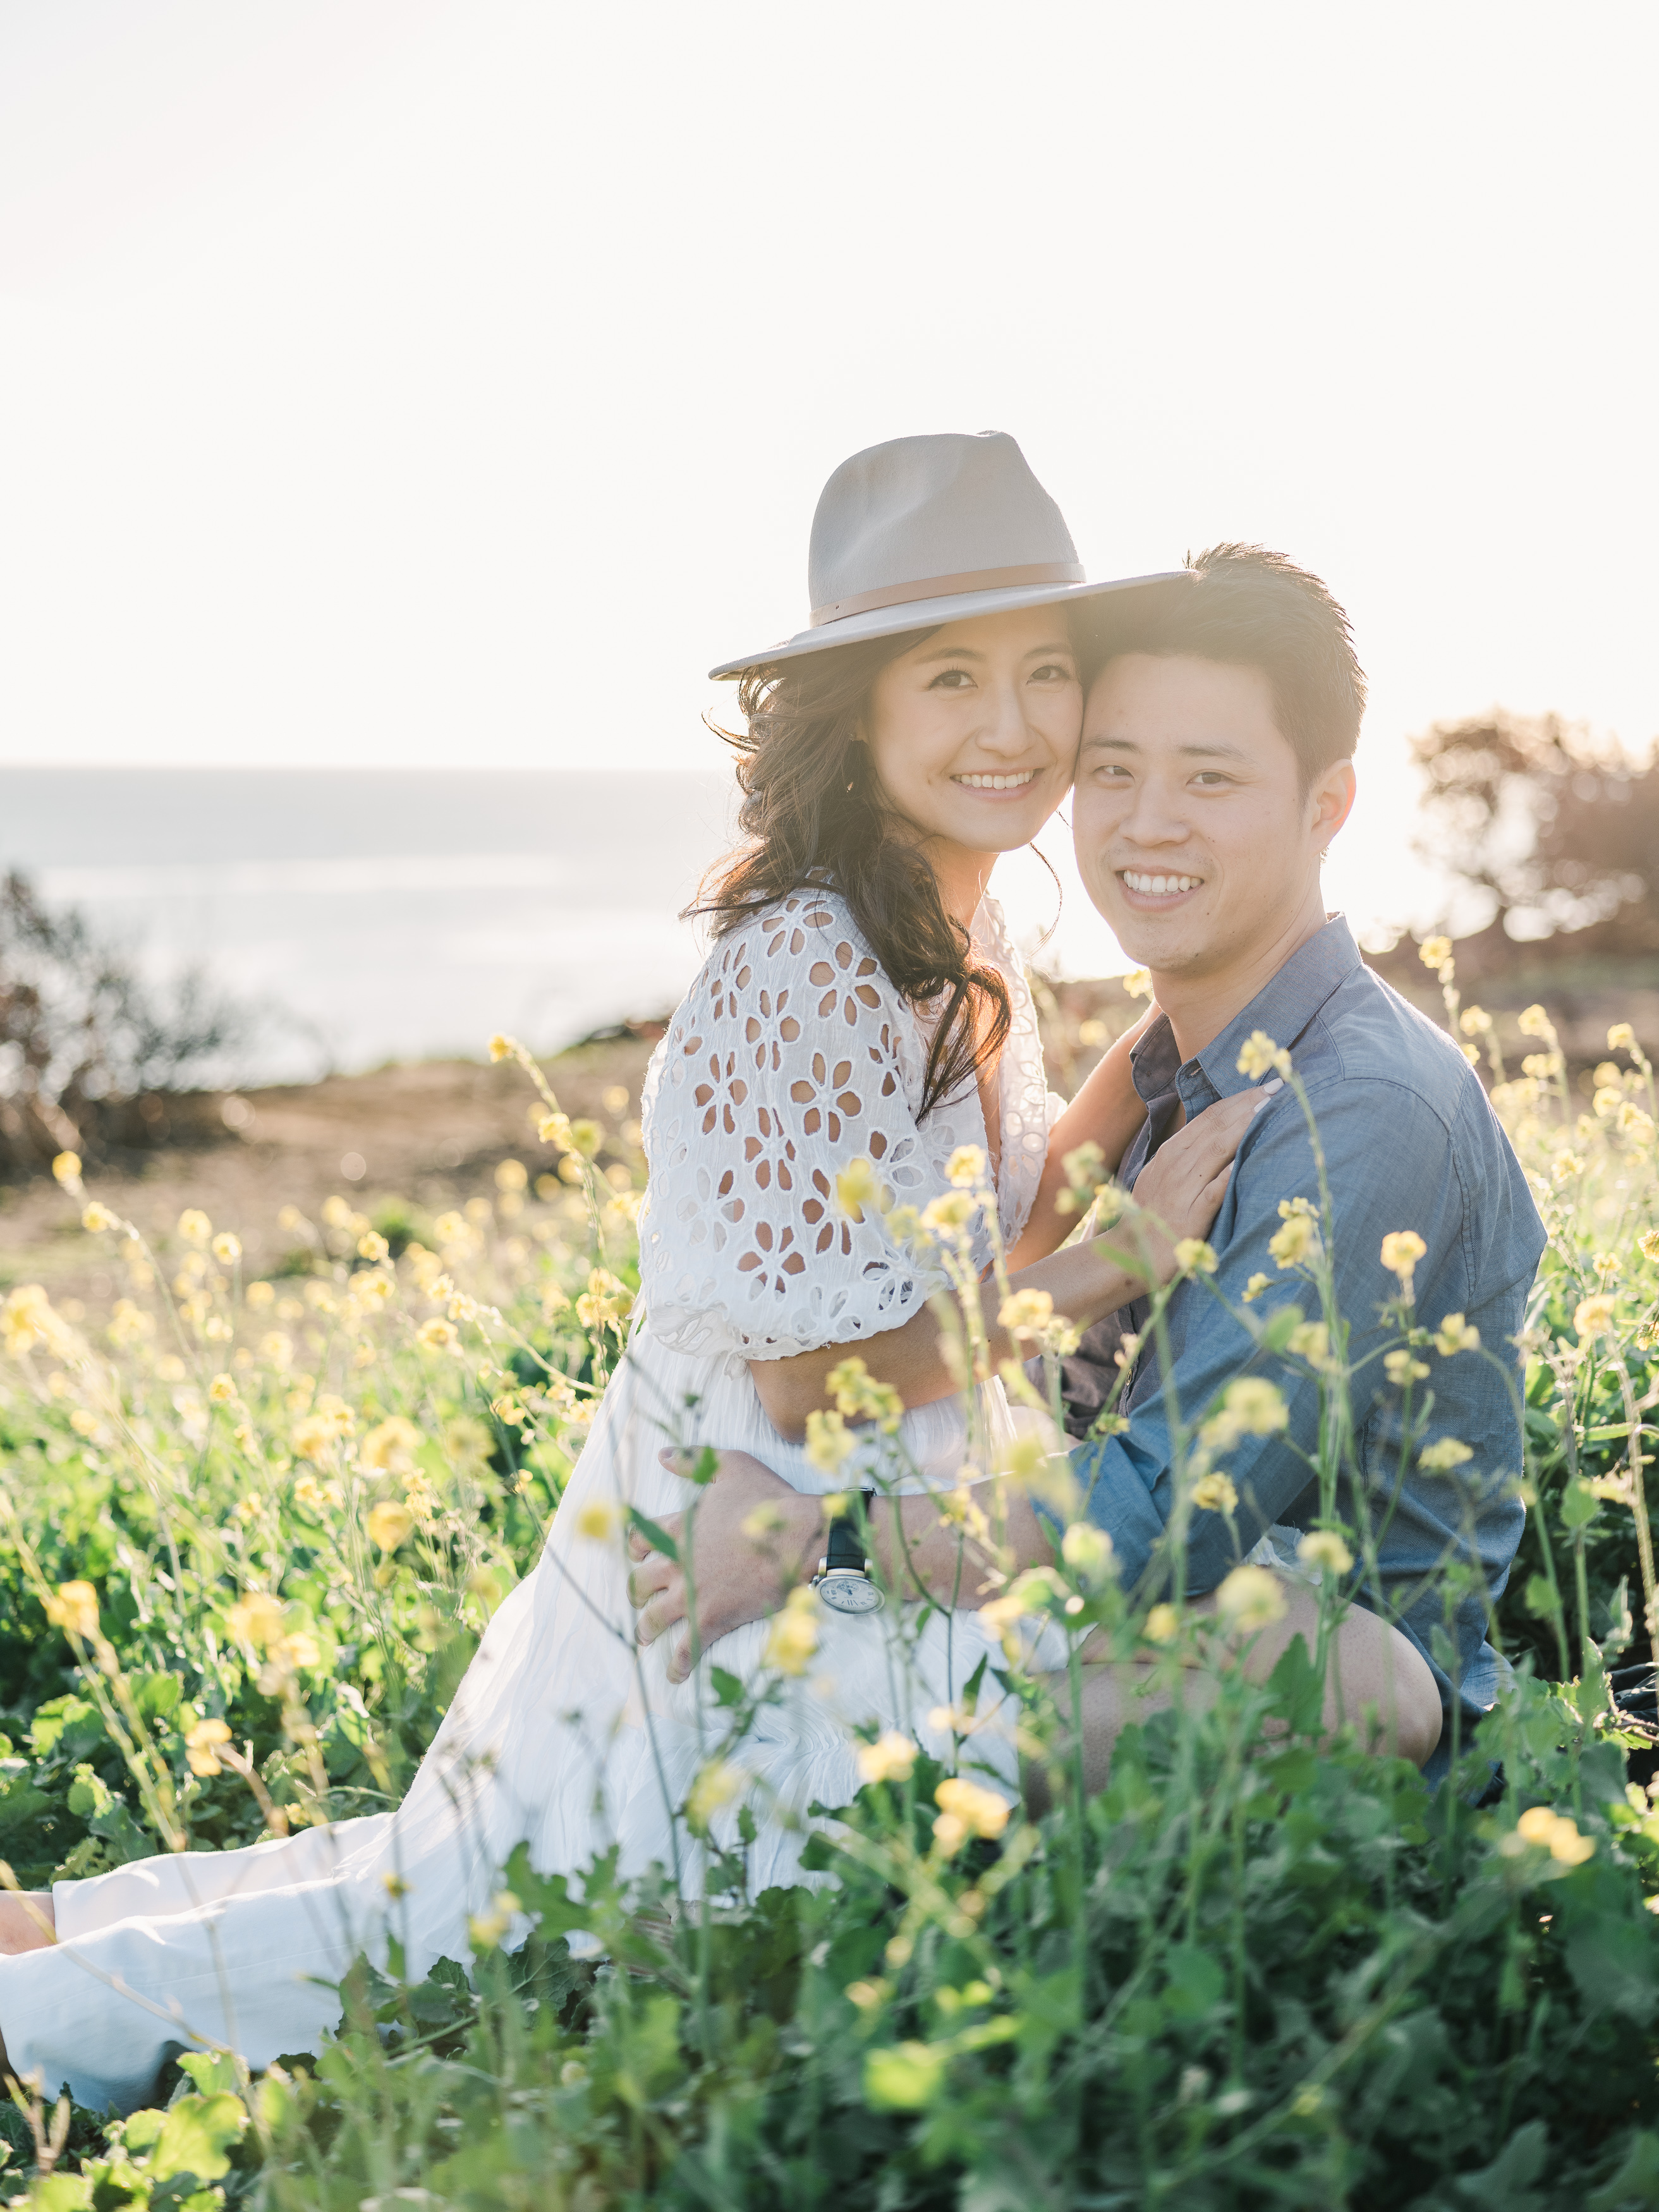 Best Engagement Photo Locations in Los Angeles - Malibu Beach